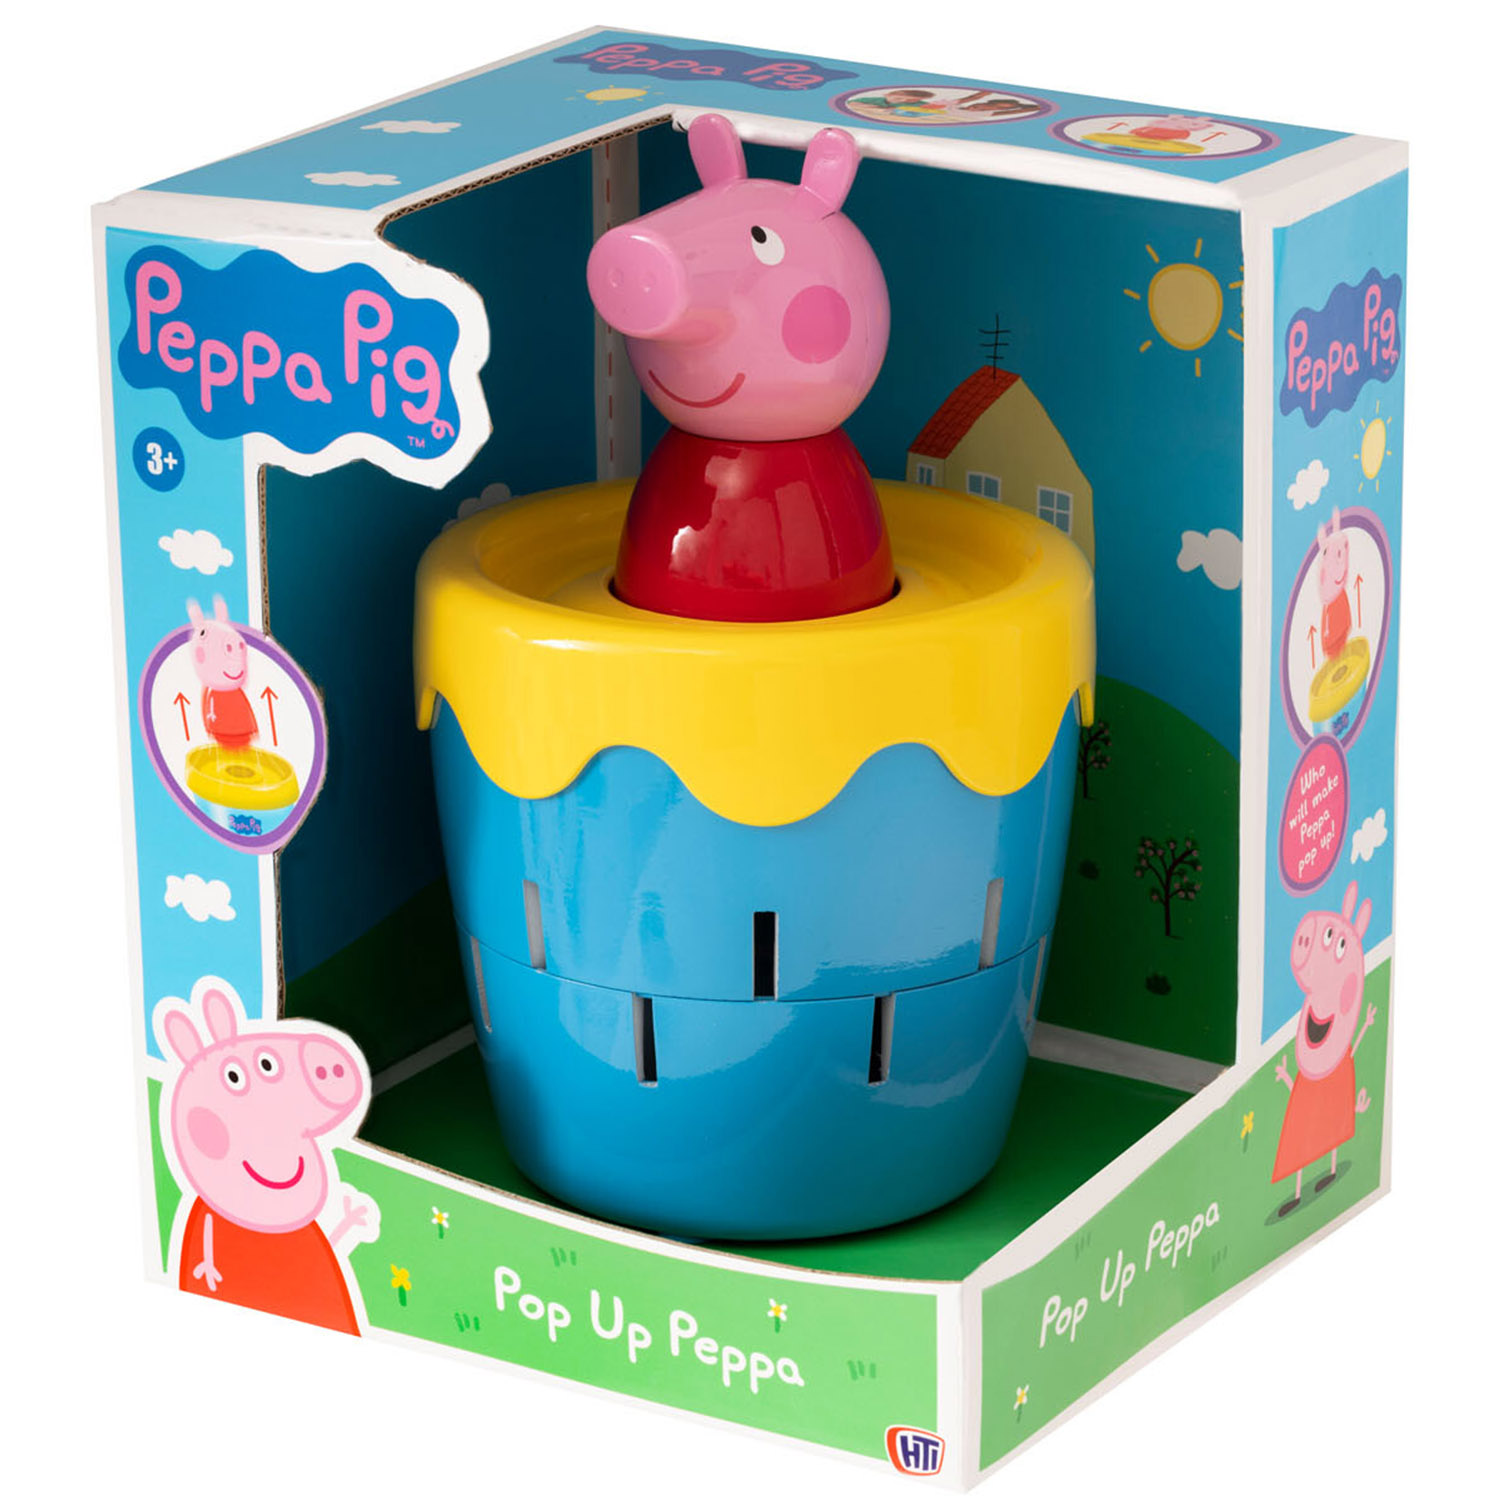 Peppa Pig Pop Up Peppa Toy Image